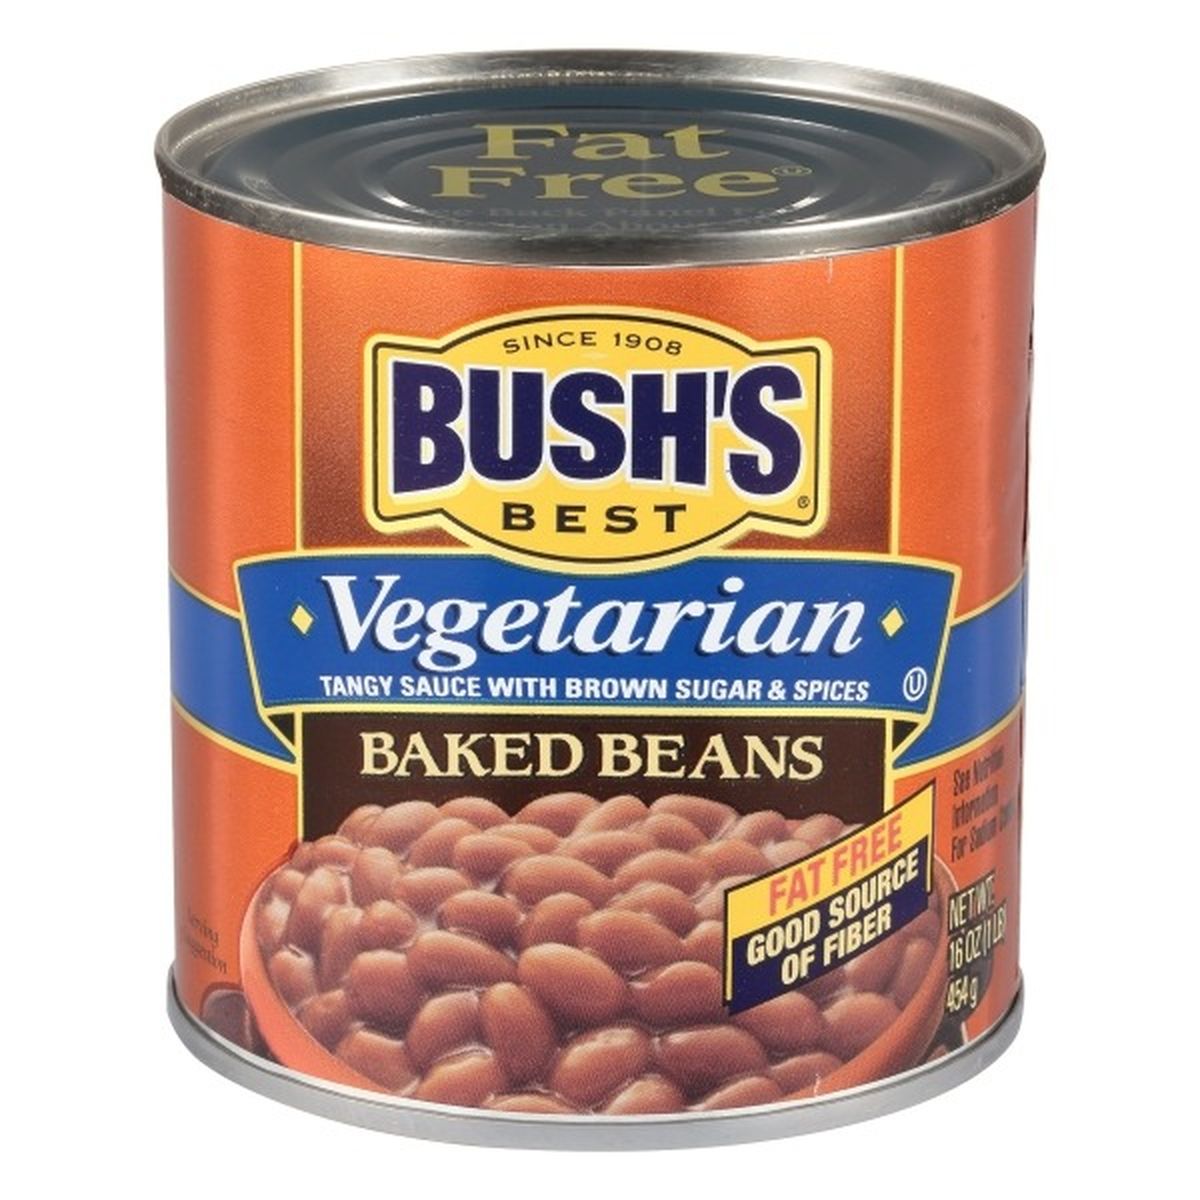 Calories in Bush's Best Baked Beans, Vegetarian